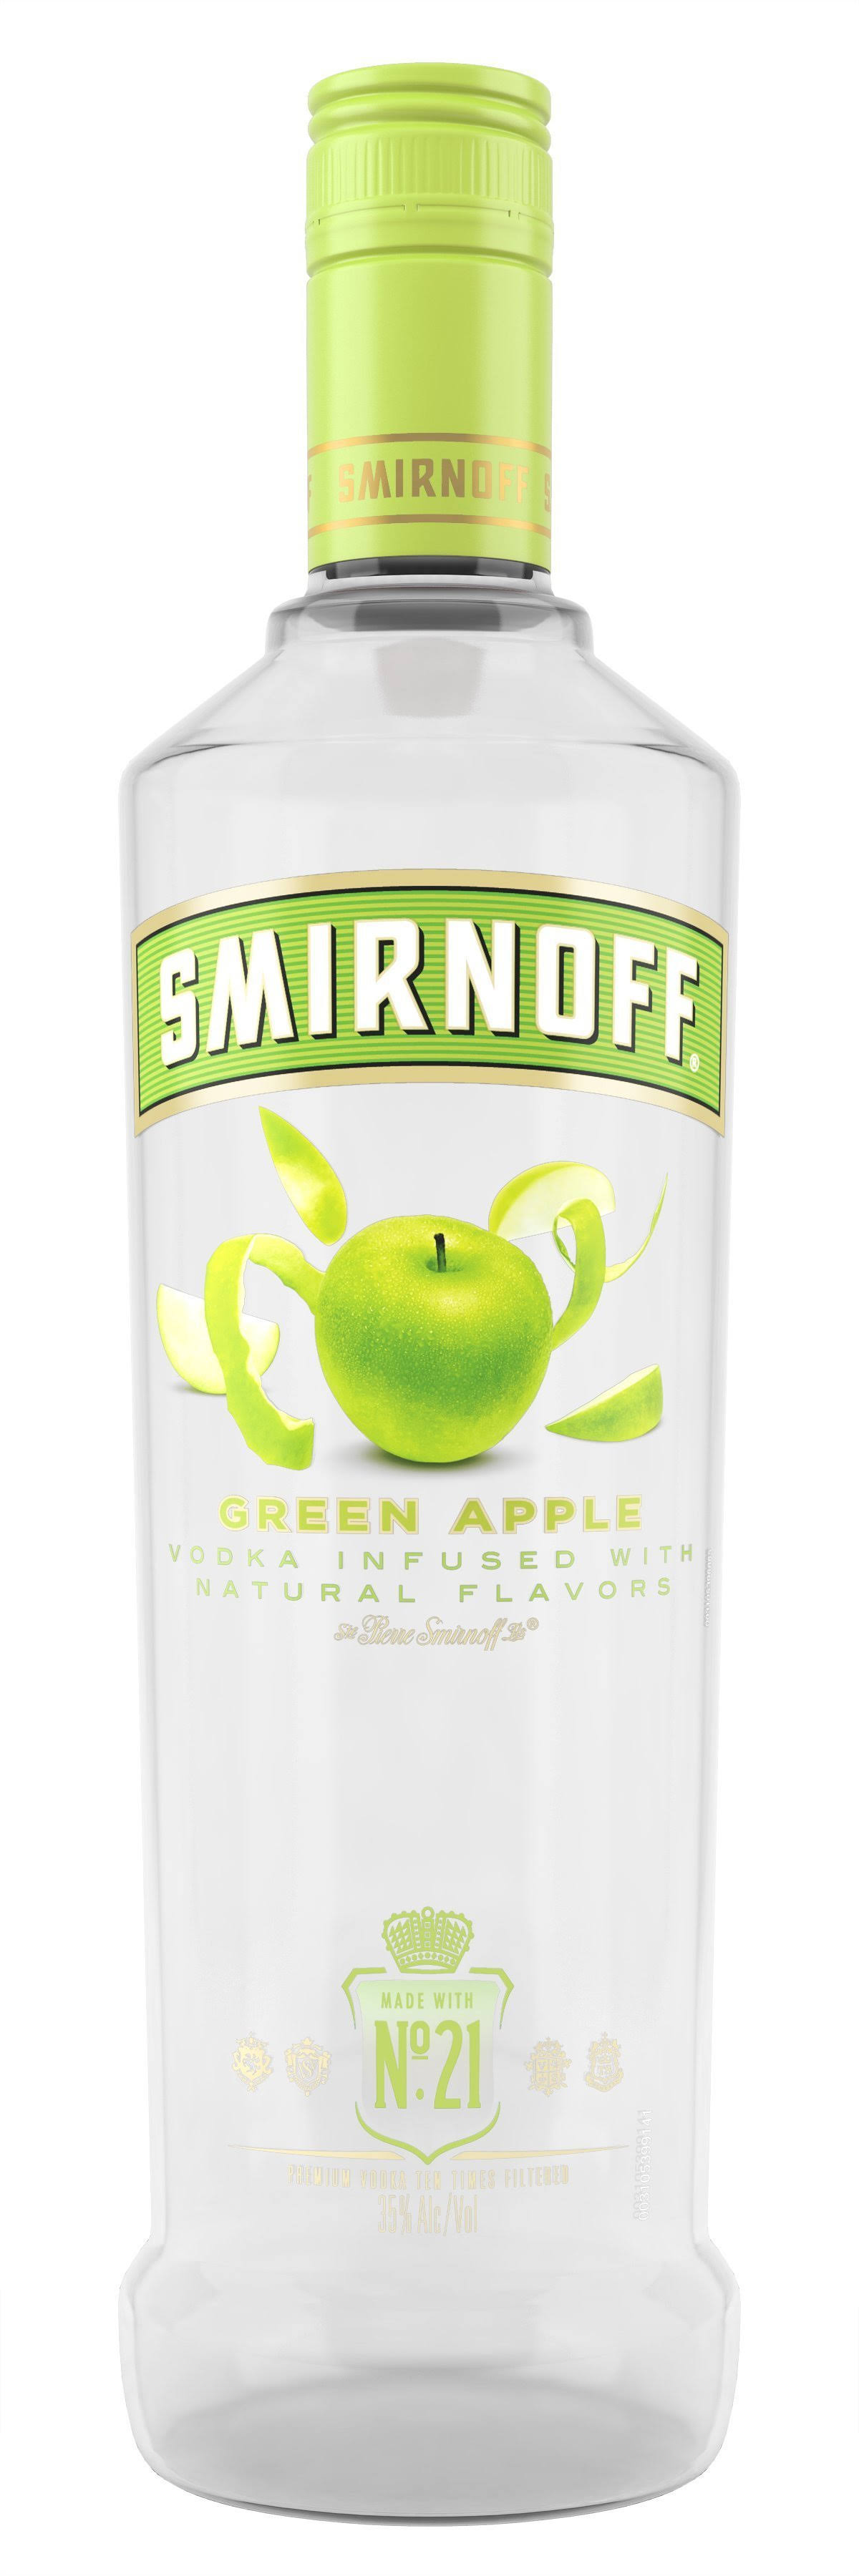 Smirnoff Vodka, Green Apple - 750 ml